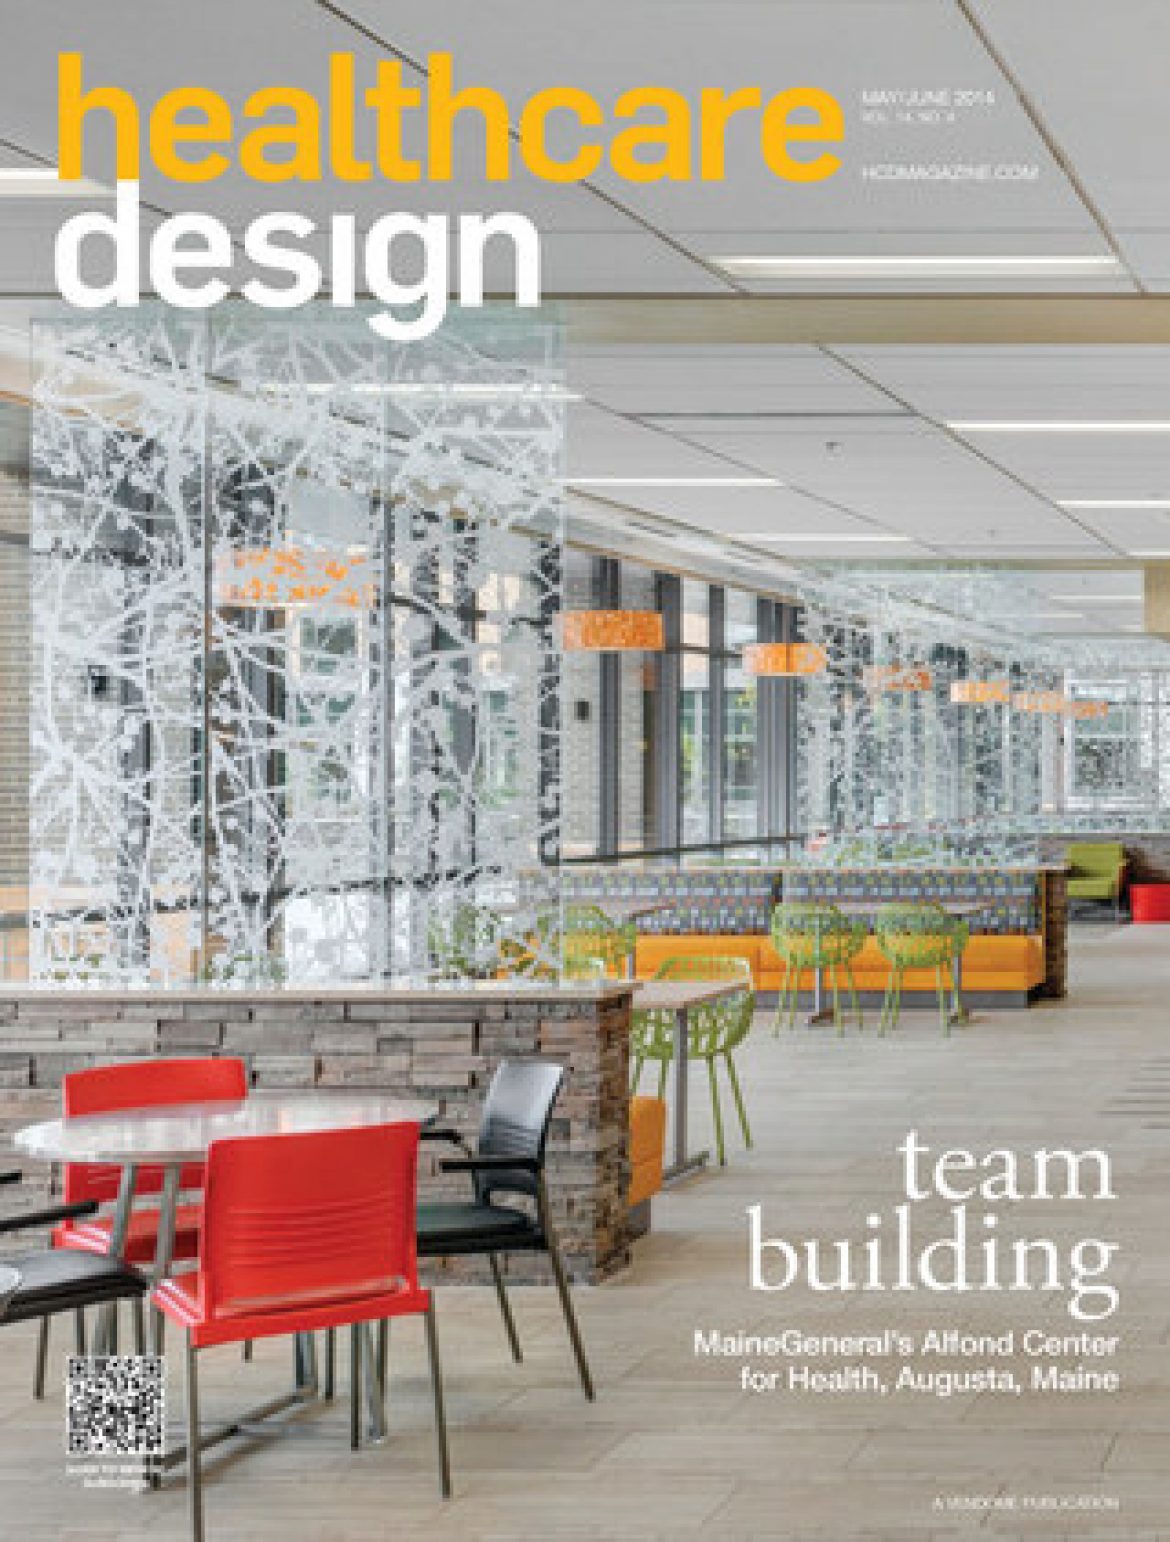 2014-healthcare-design-magazine-may-ask-studio